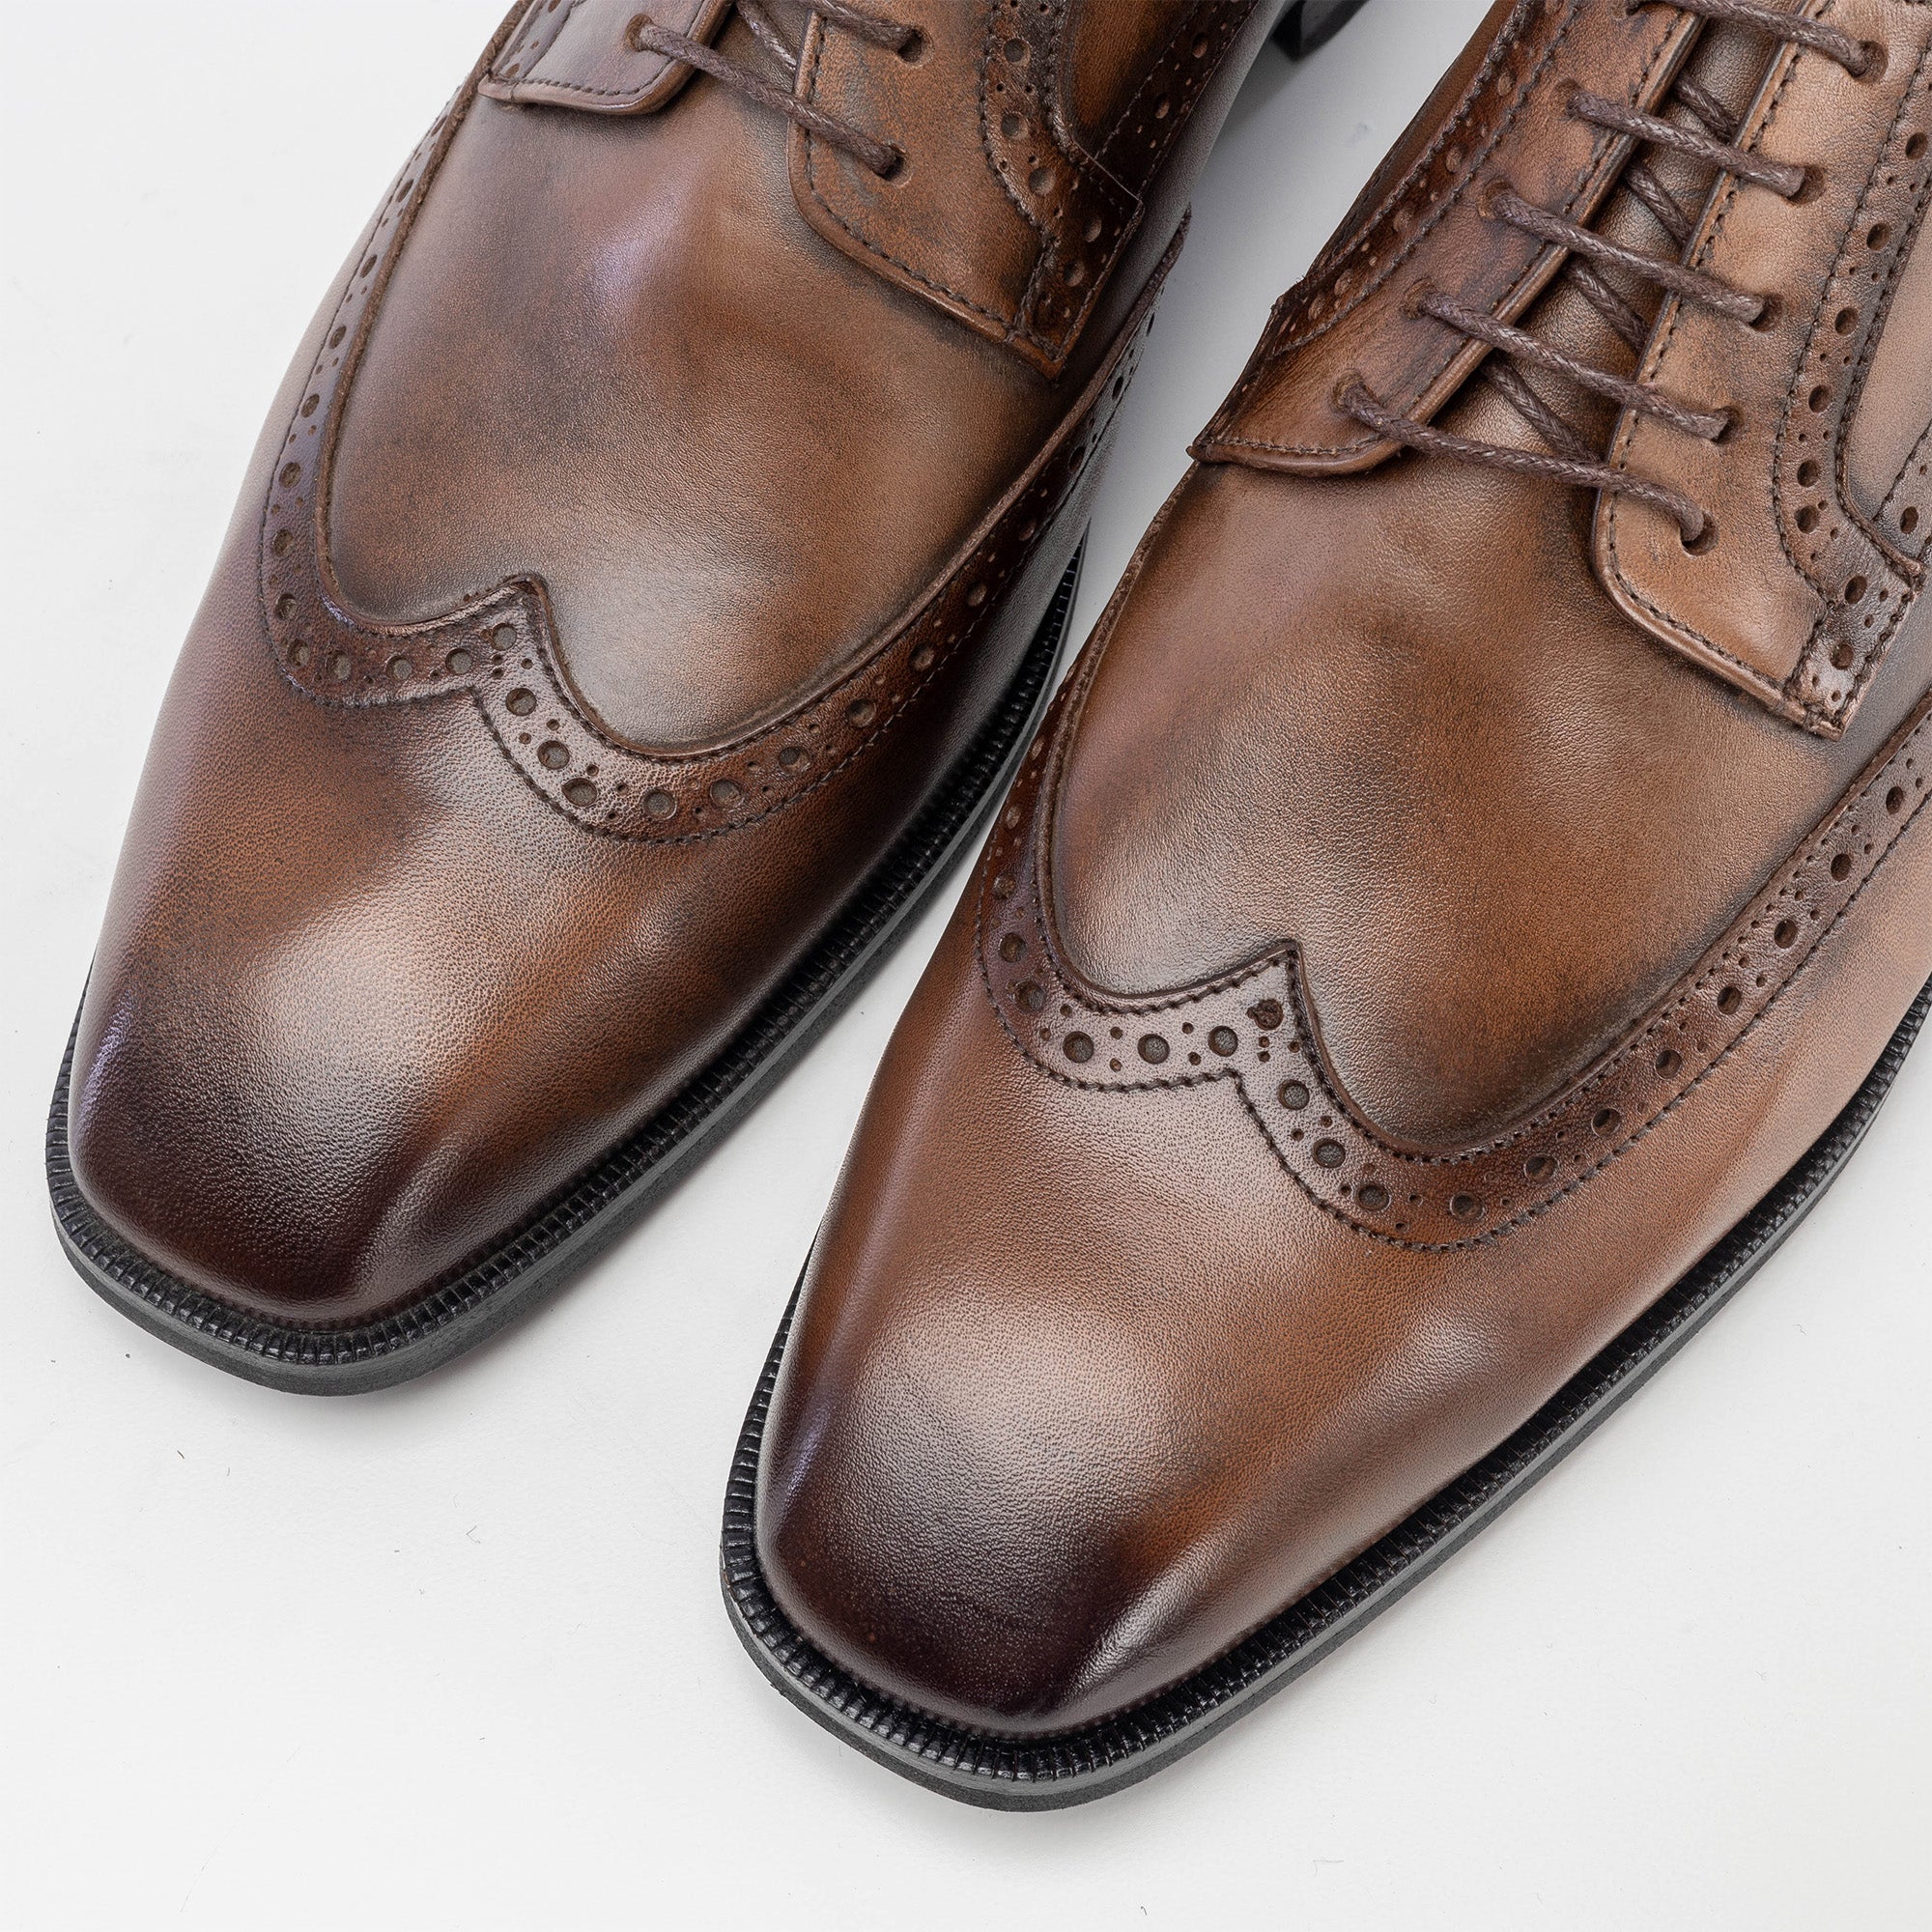 '1304 Chaussure en cuir Marron vintage